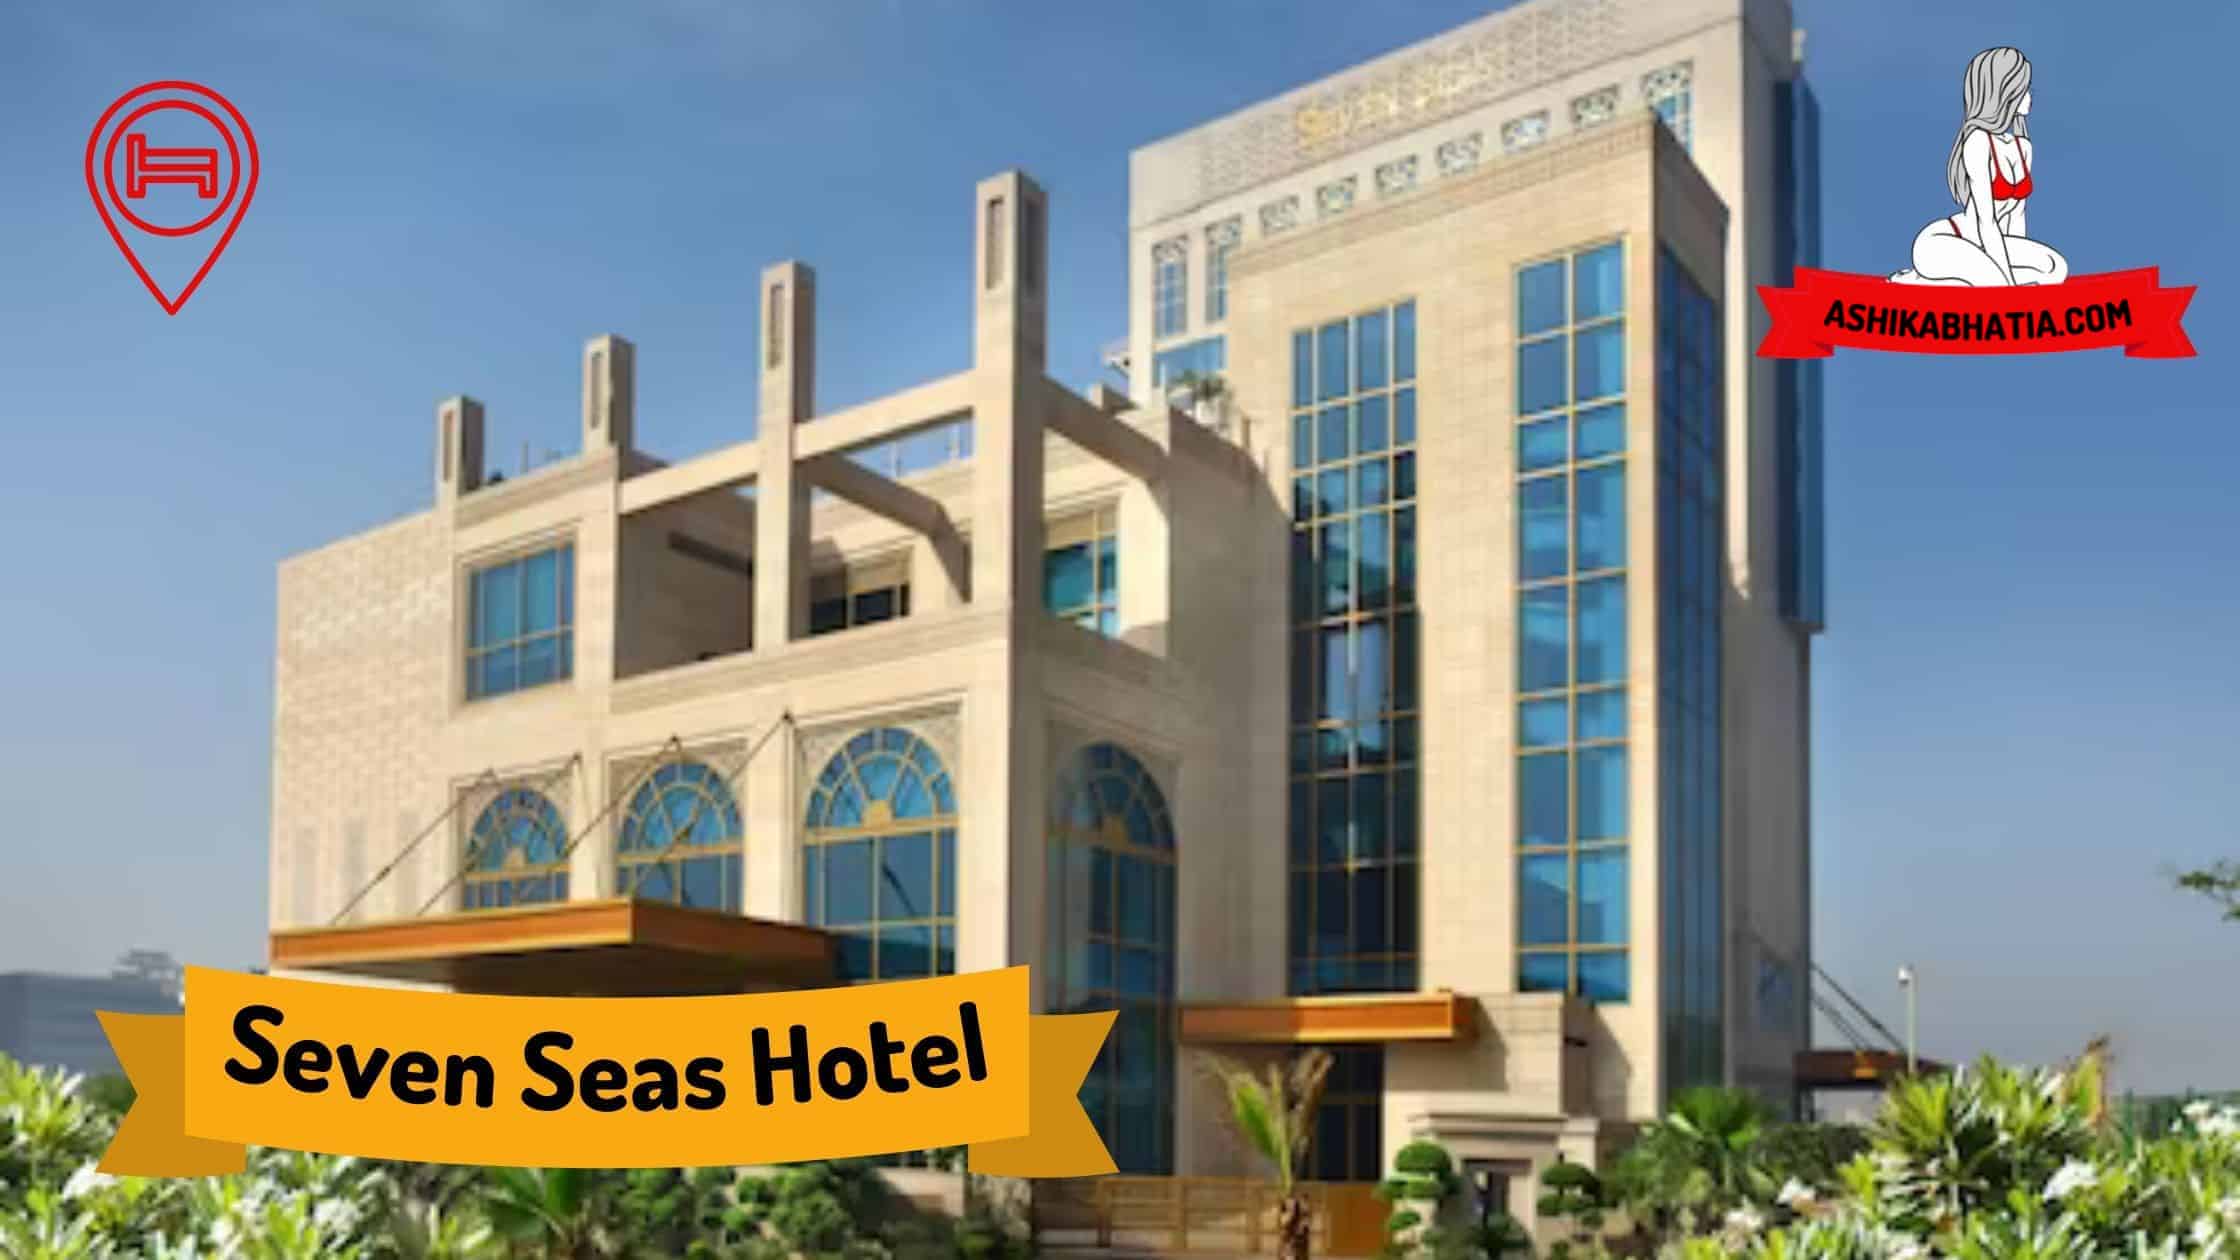 Seven Seas Hotel Escorts